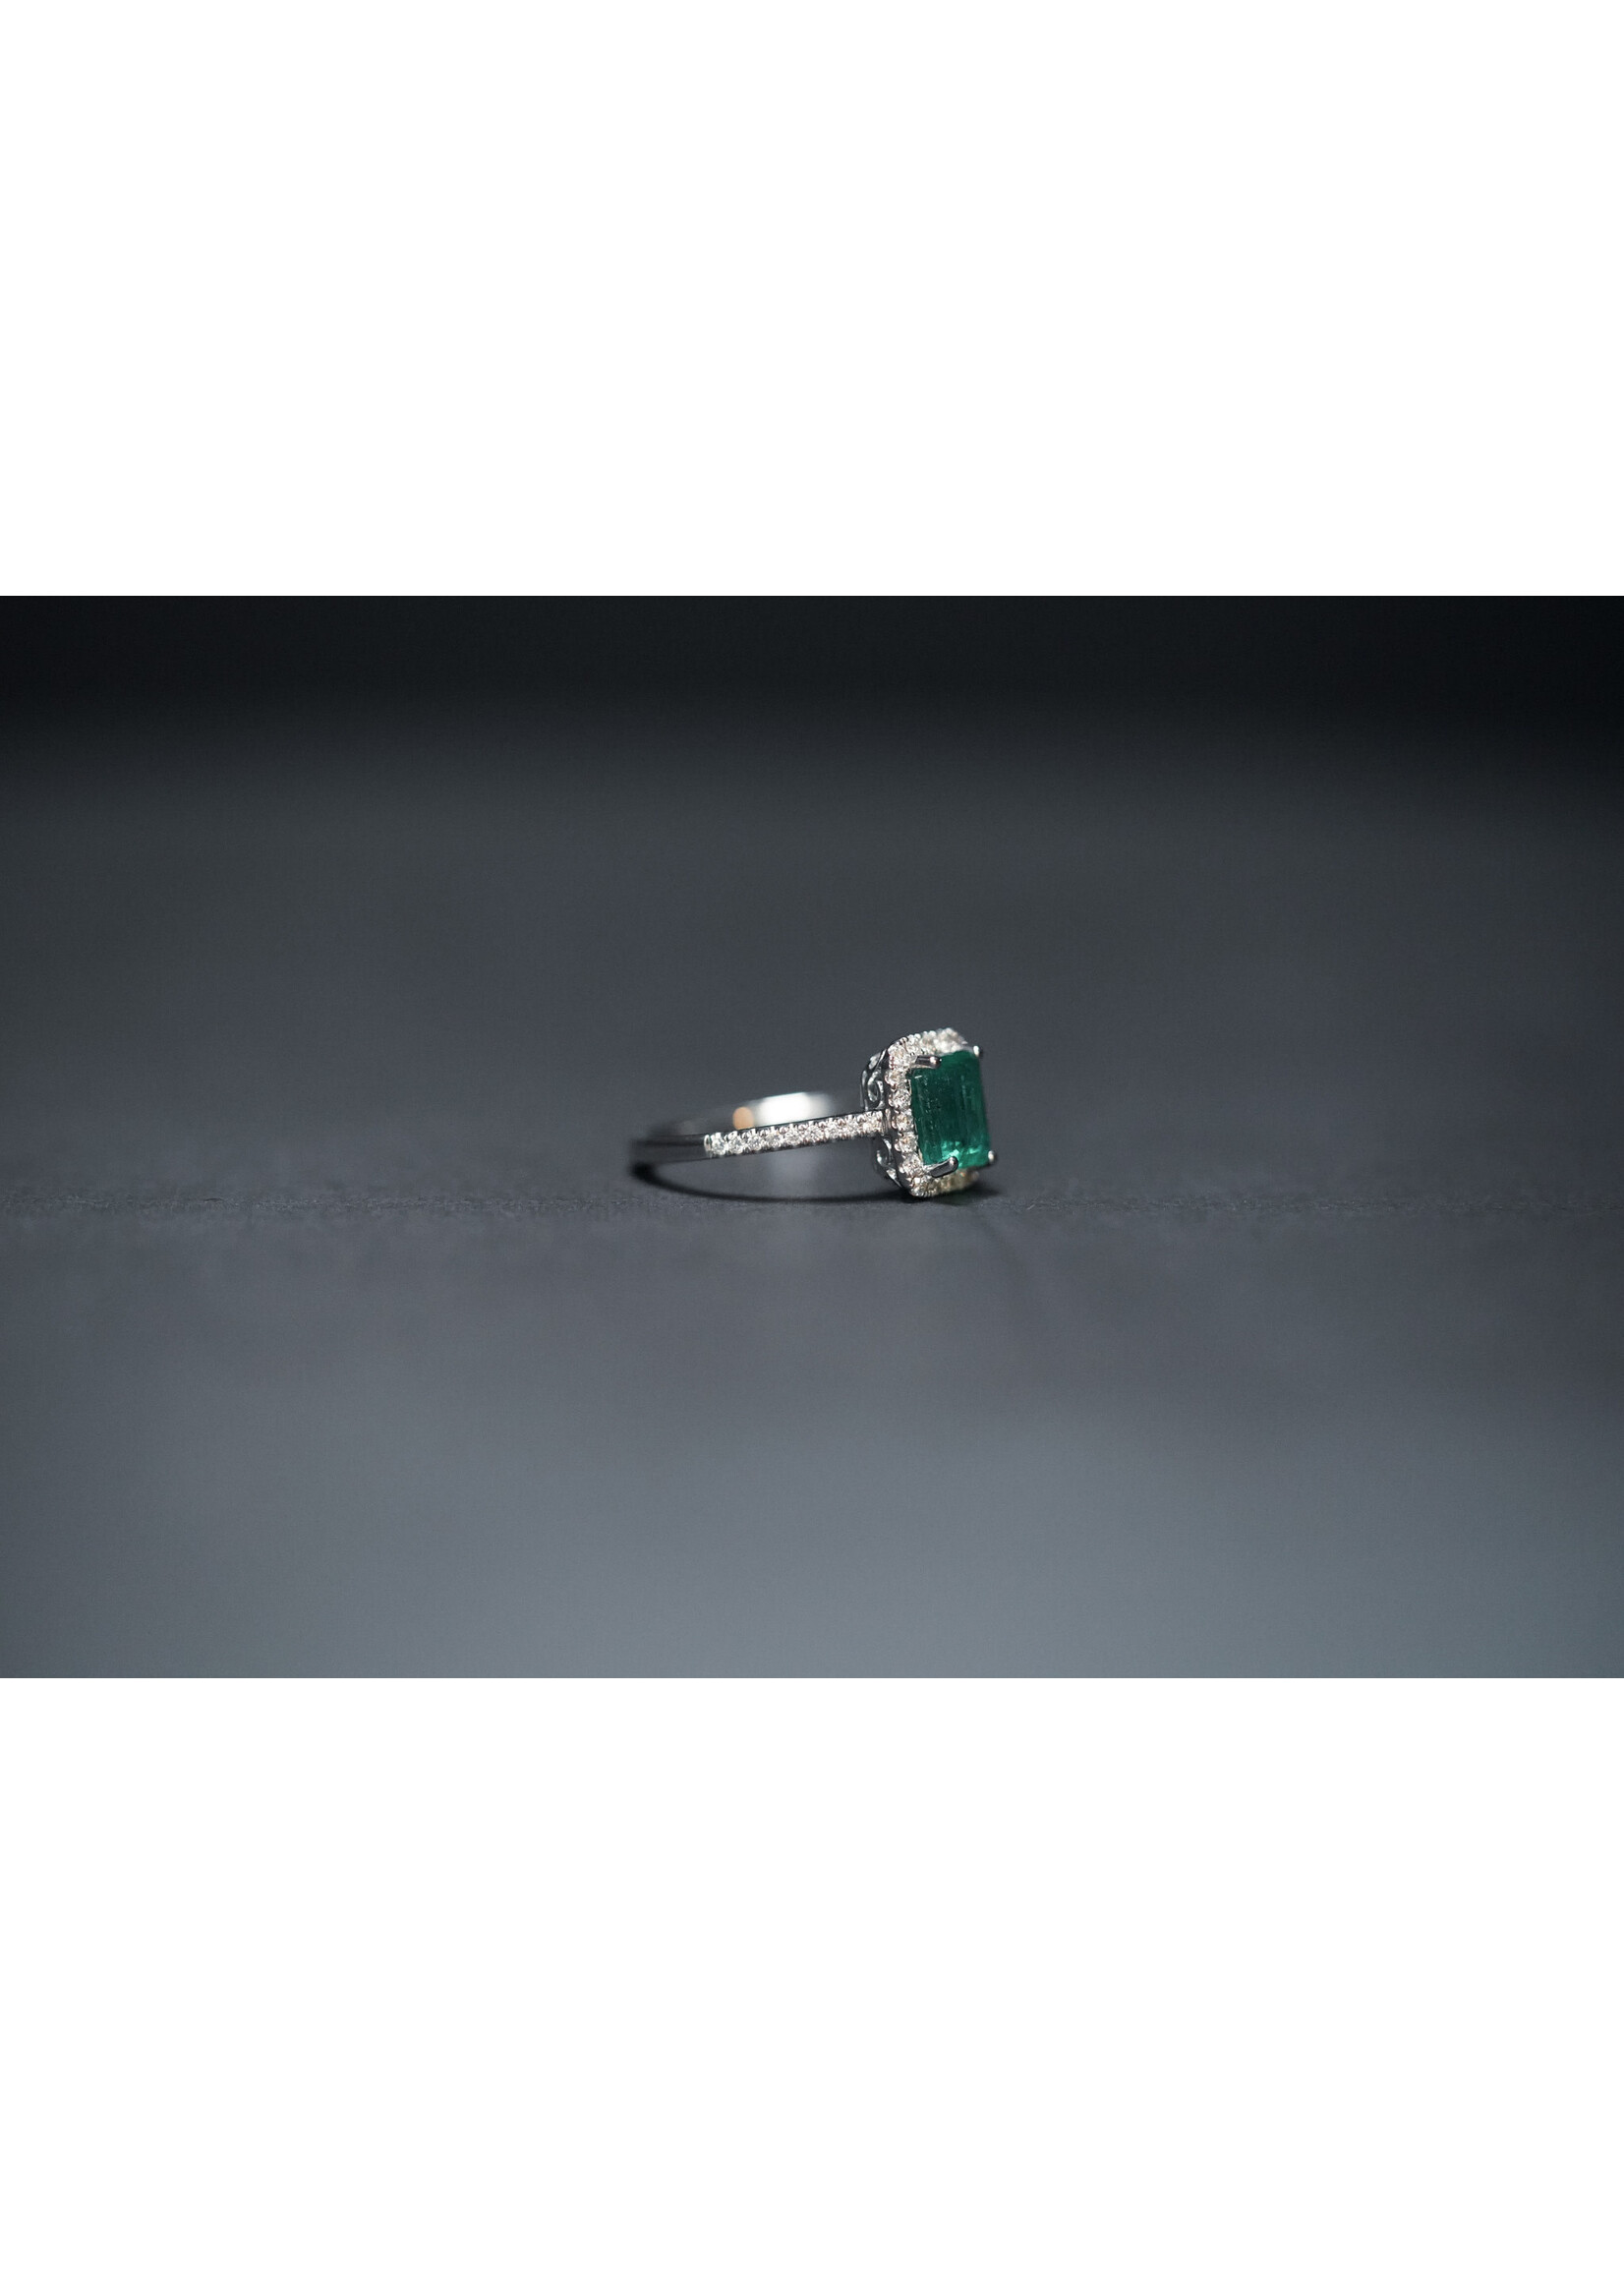 18KW 2.69g 1.42ctw (1.17ctr) Emerald & Diamond Halo Ring (size 6.5)